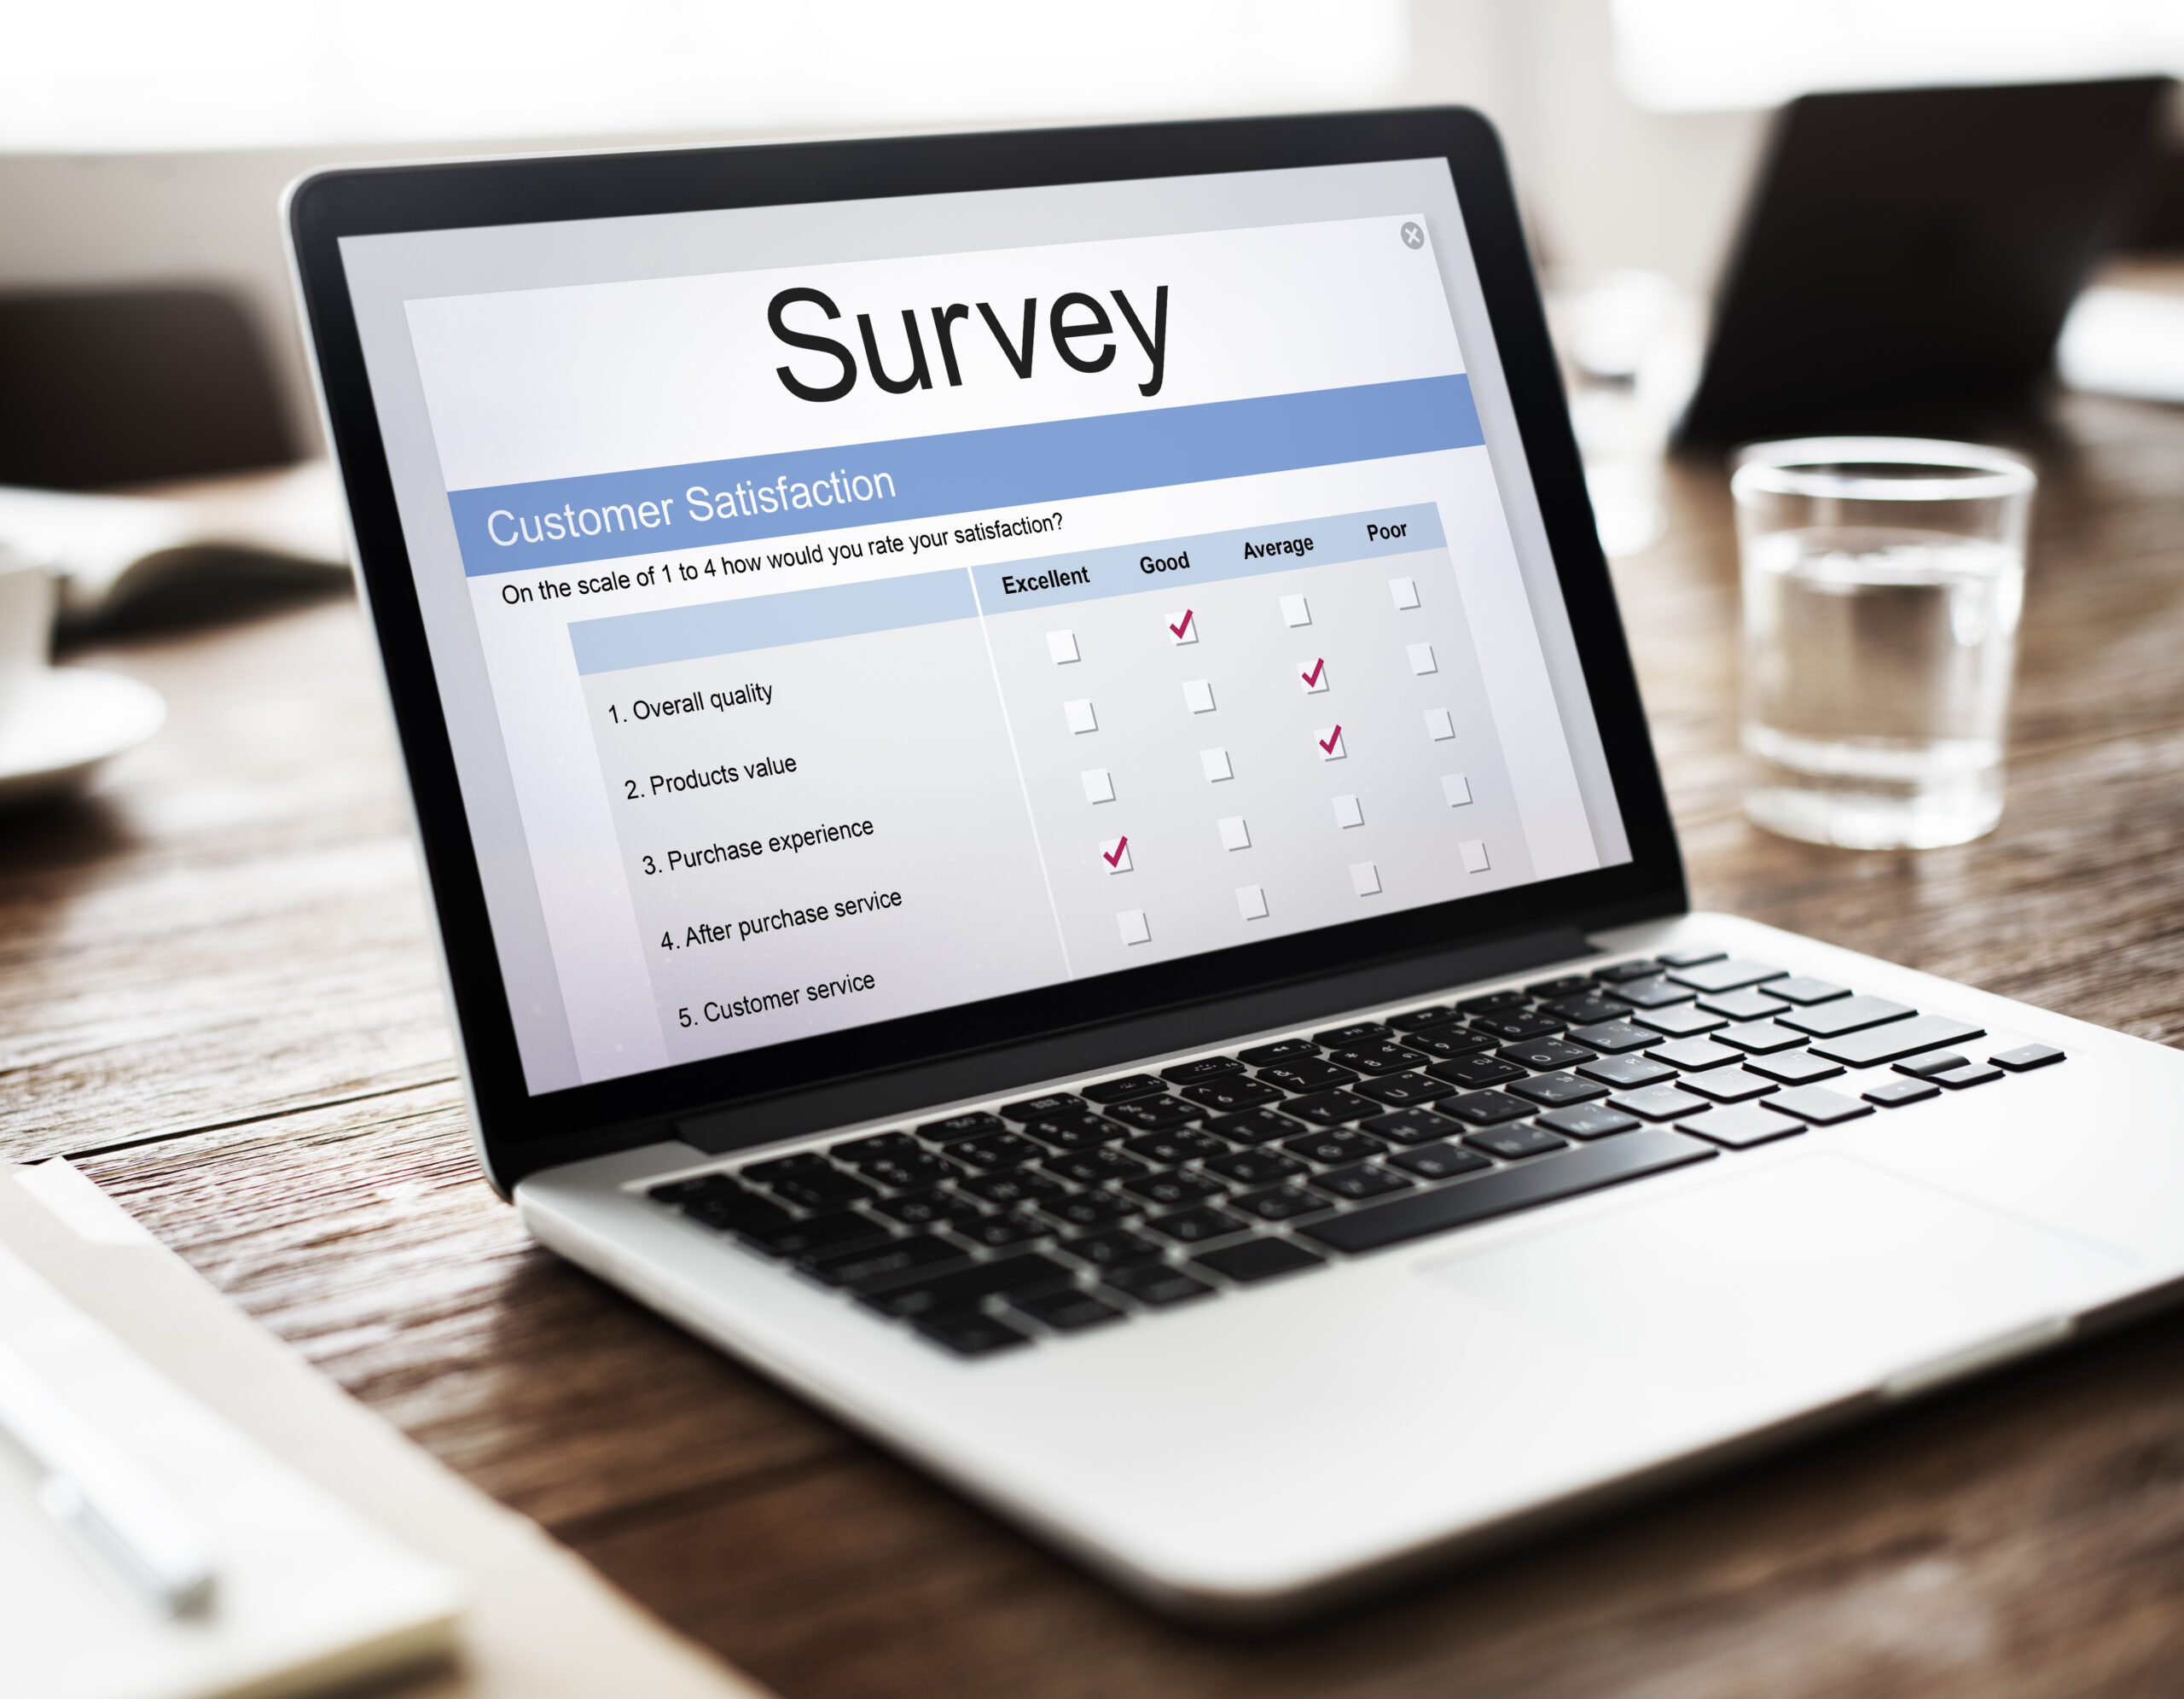 Laptop showing survey on screen